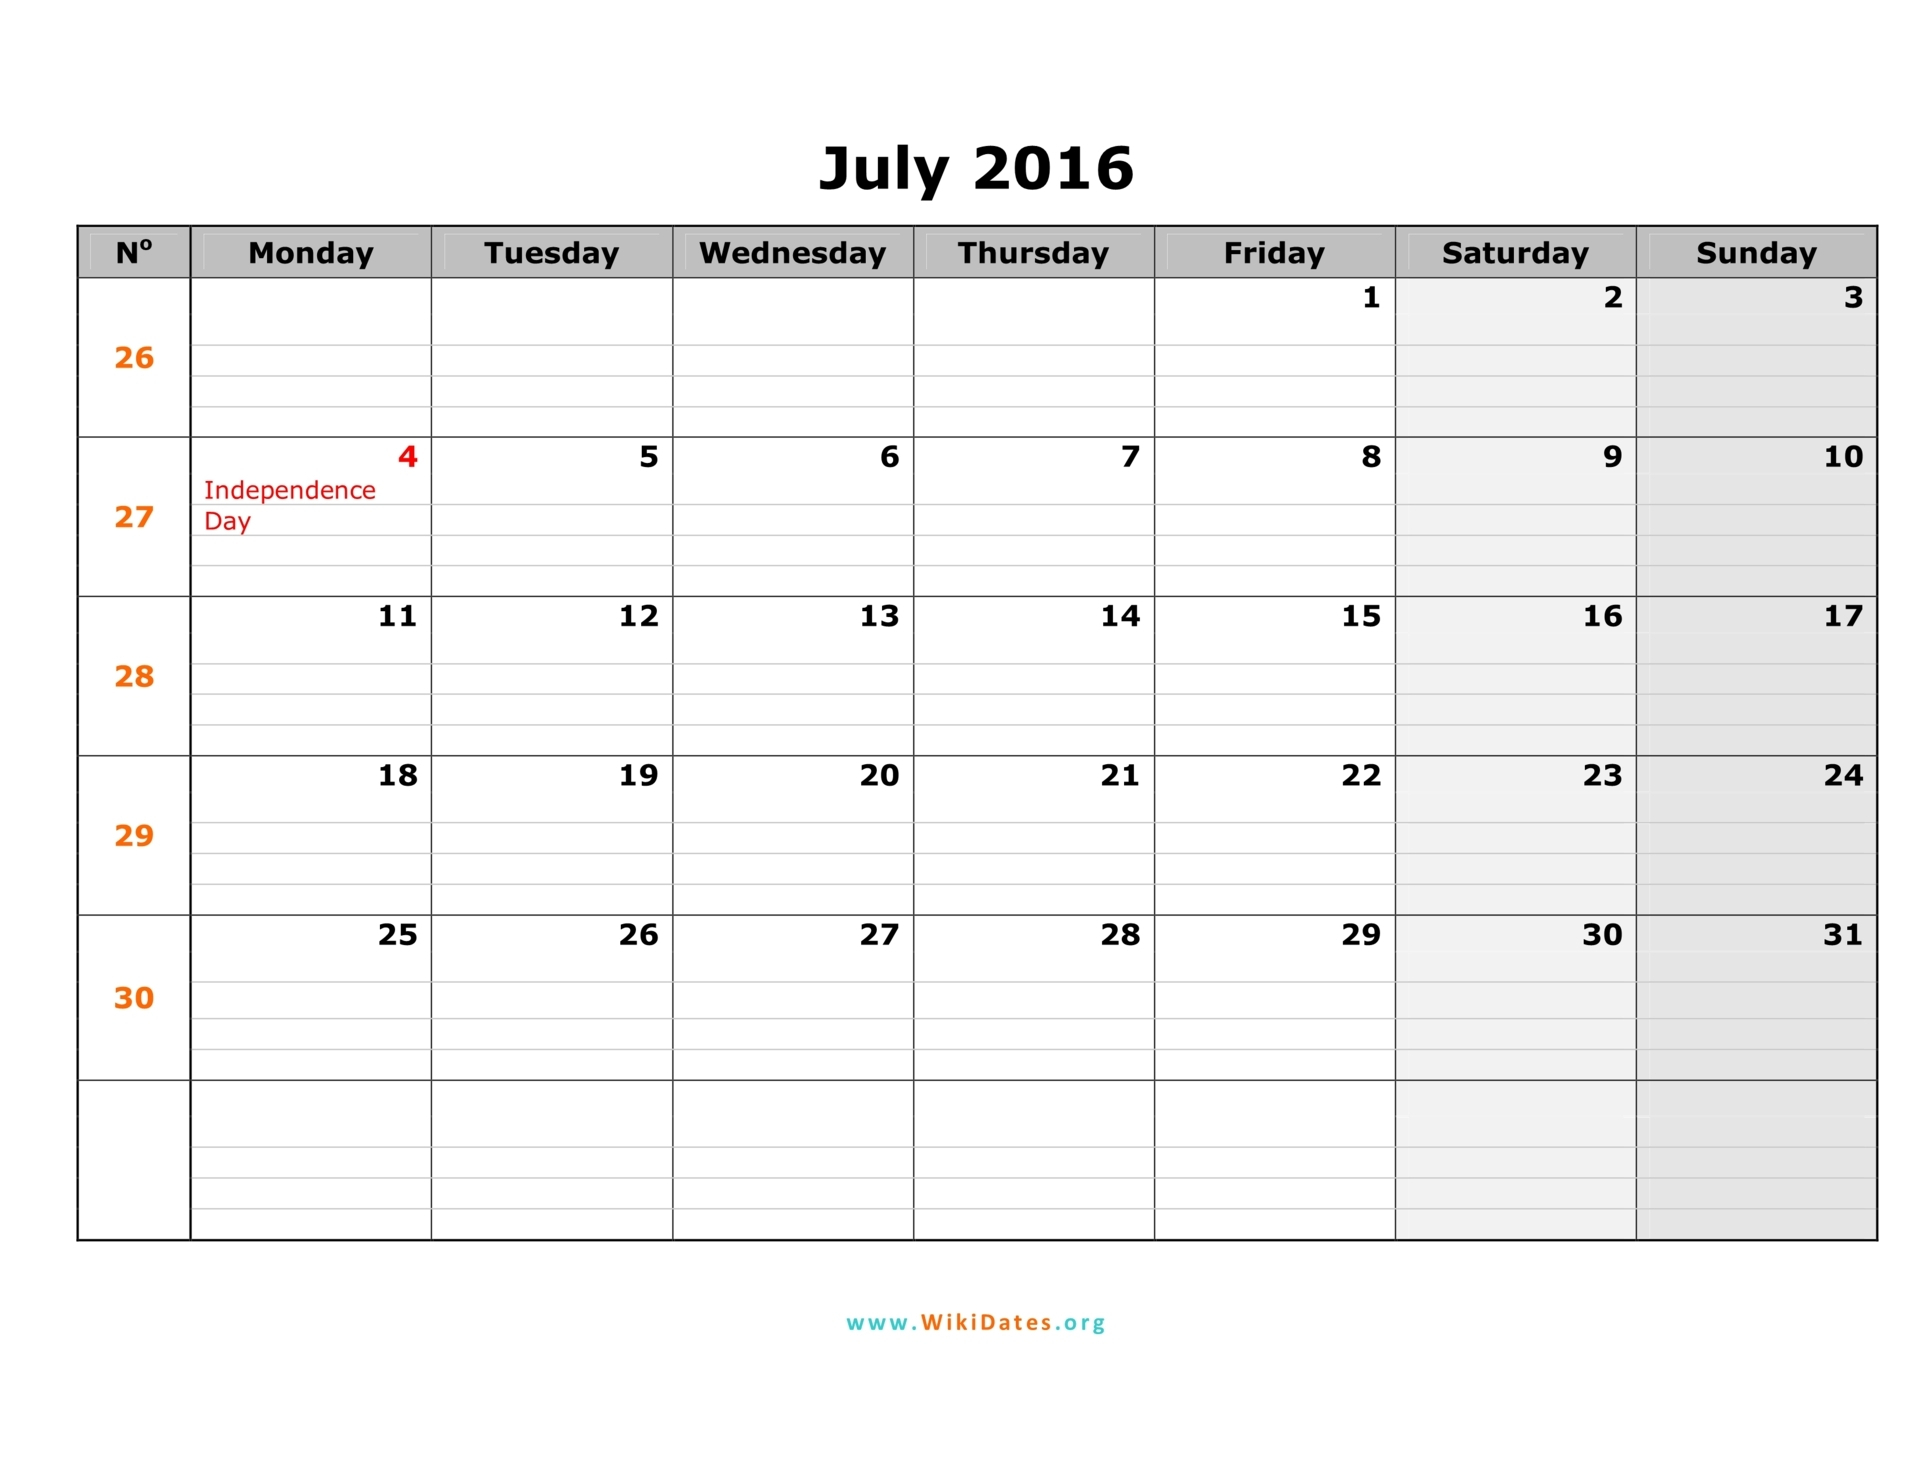 July 2016 Calendar | Wikidates